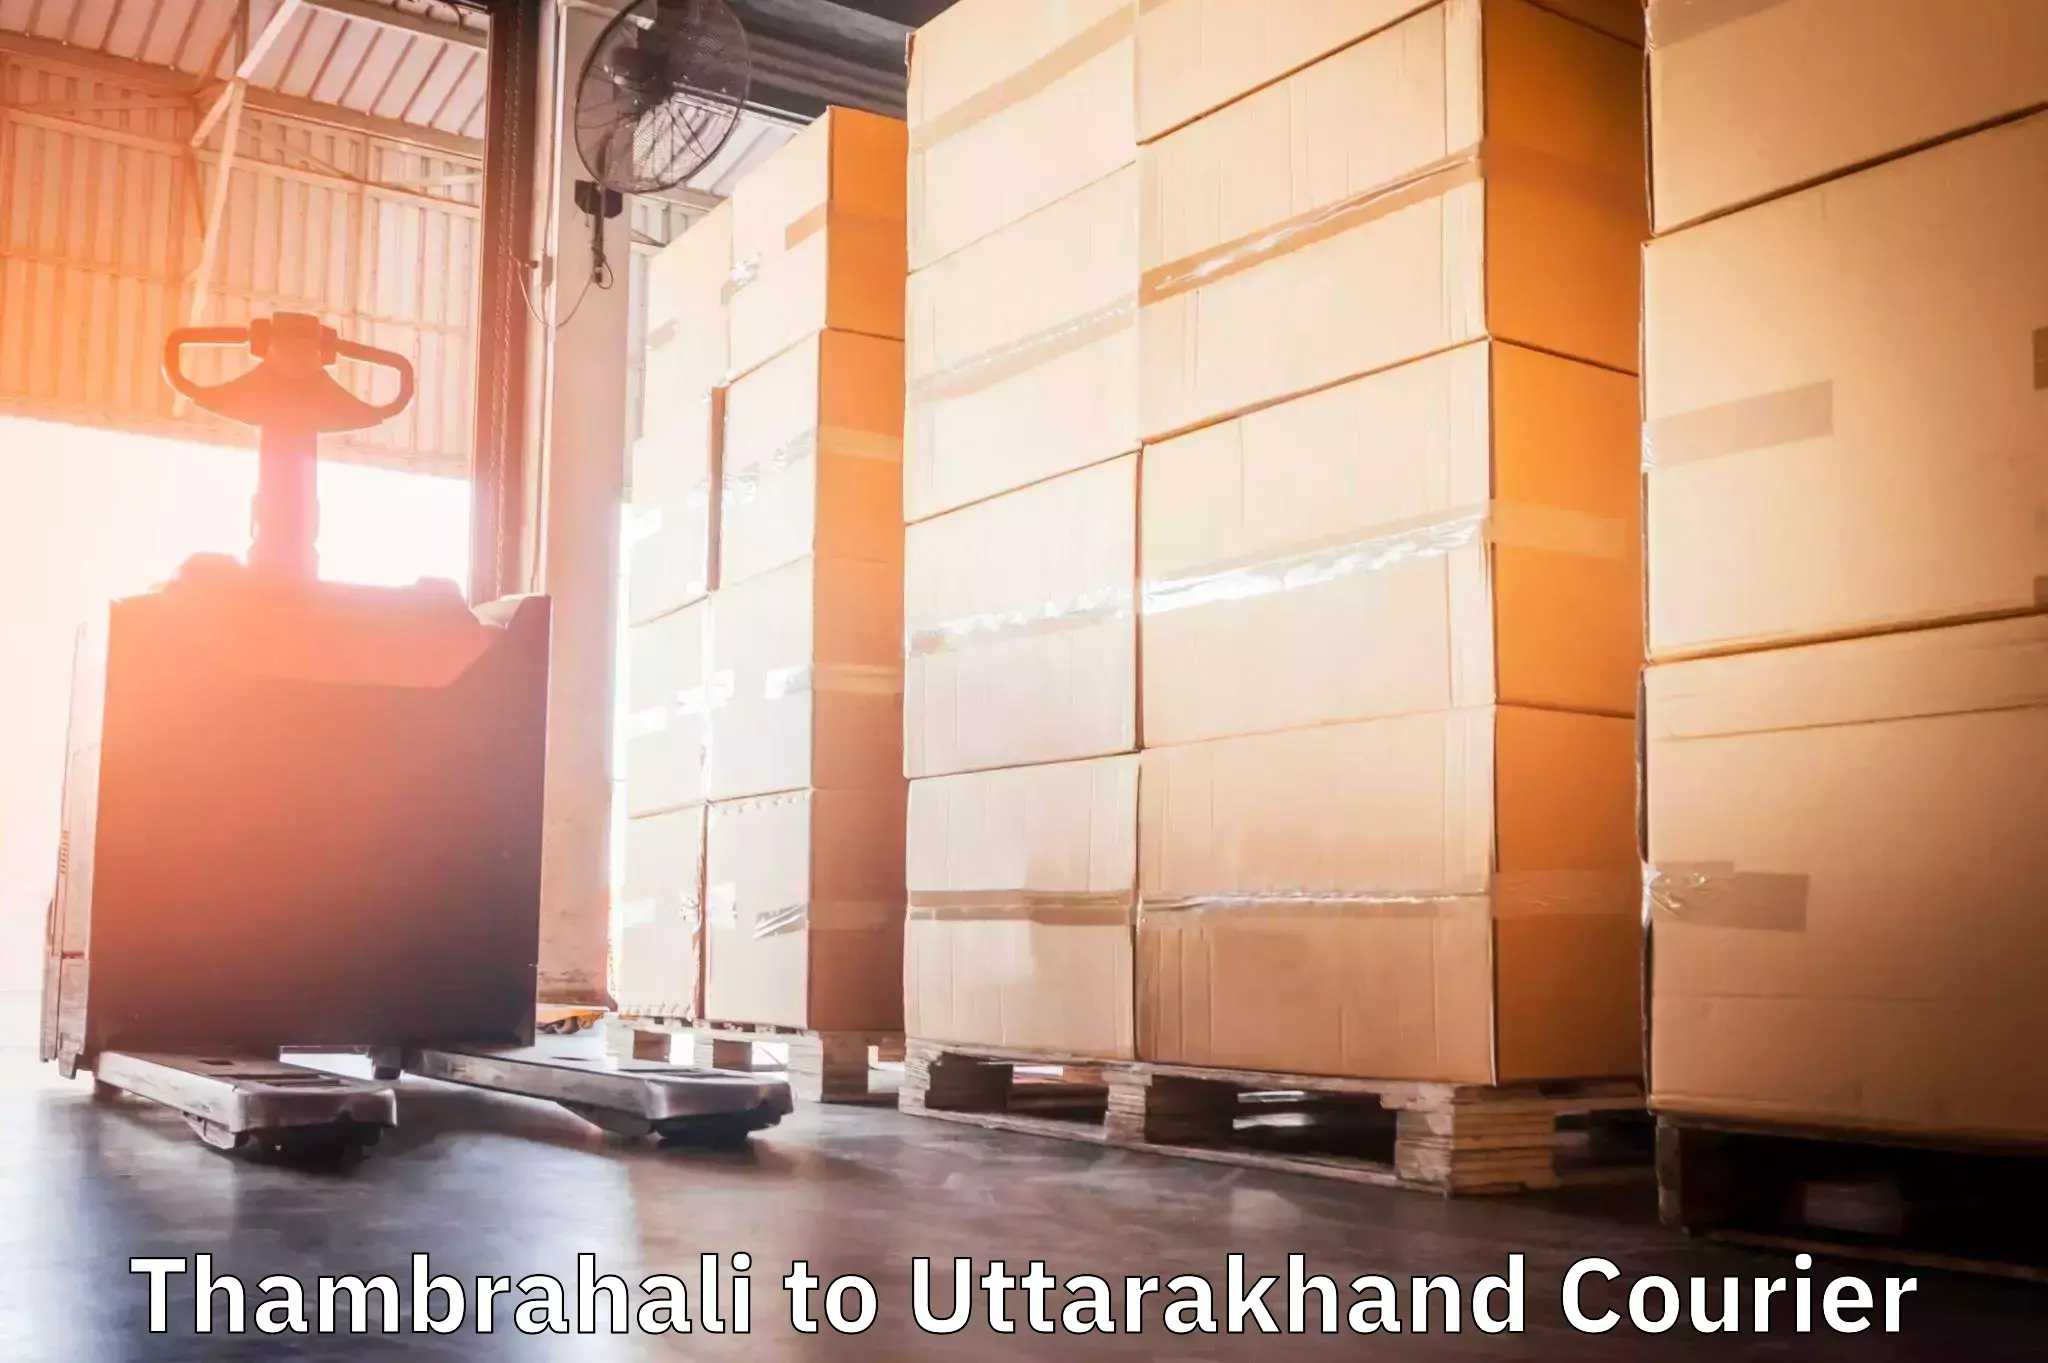 Delivery service partnership Thambrahali to Uttarakhand